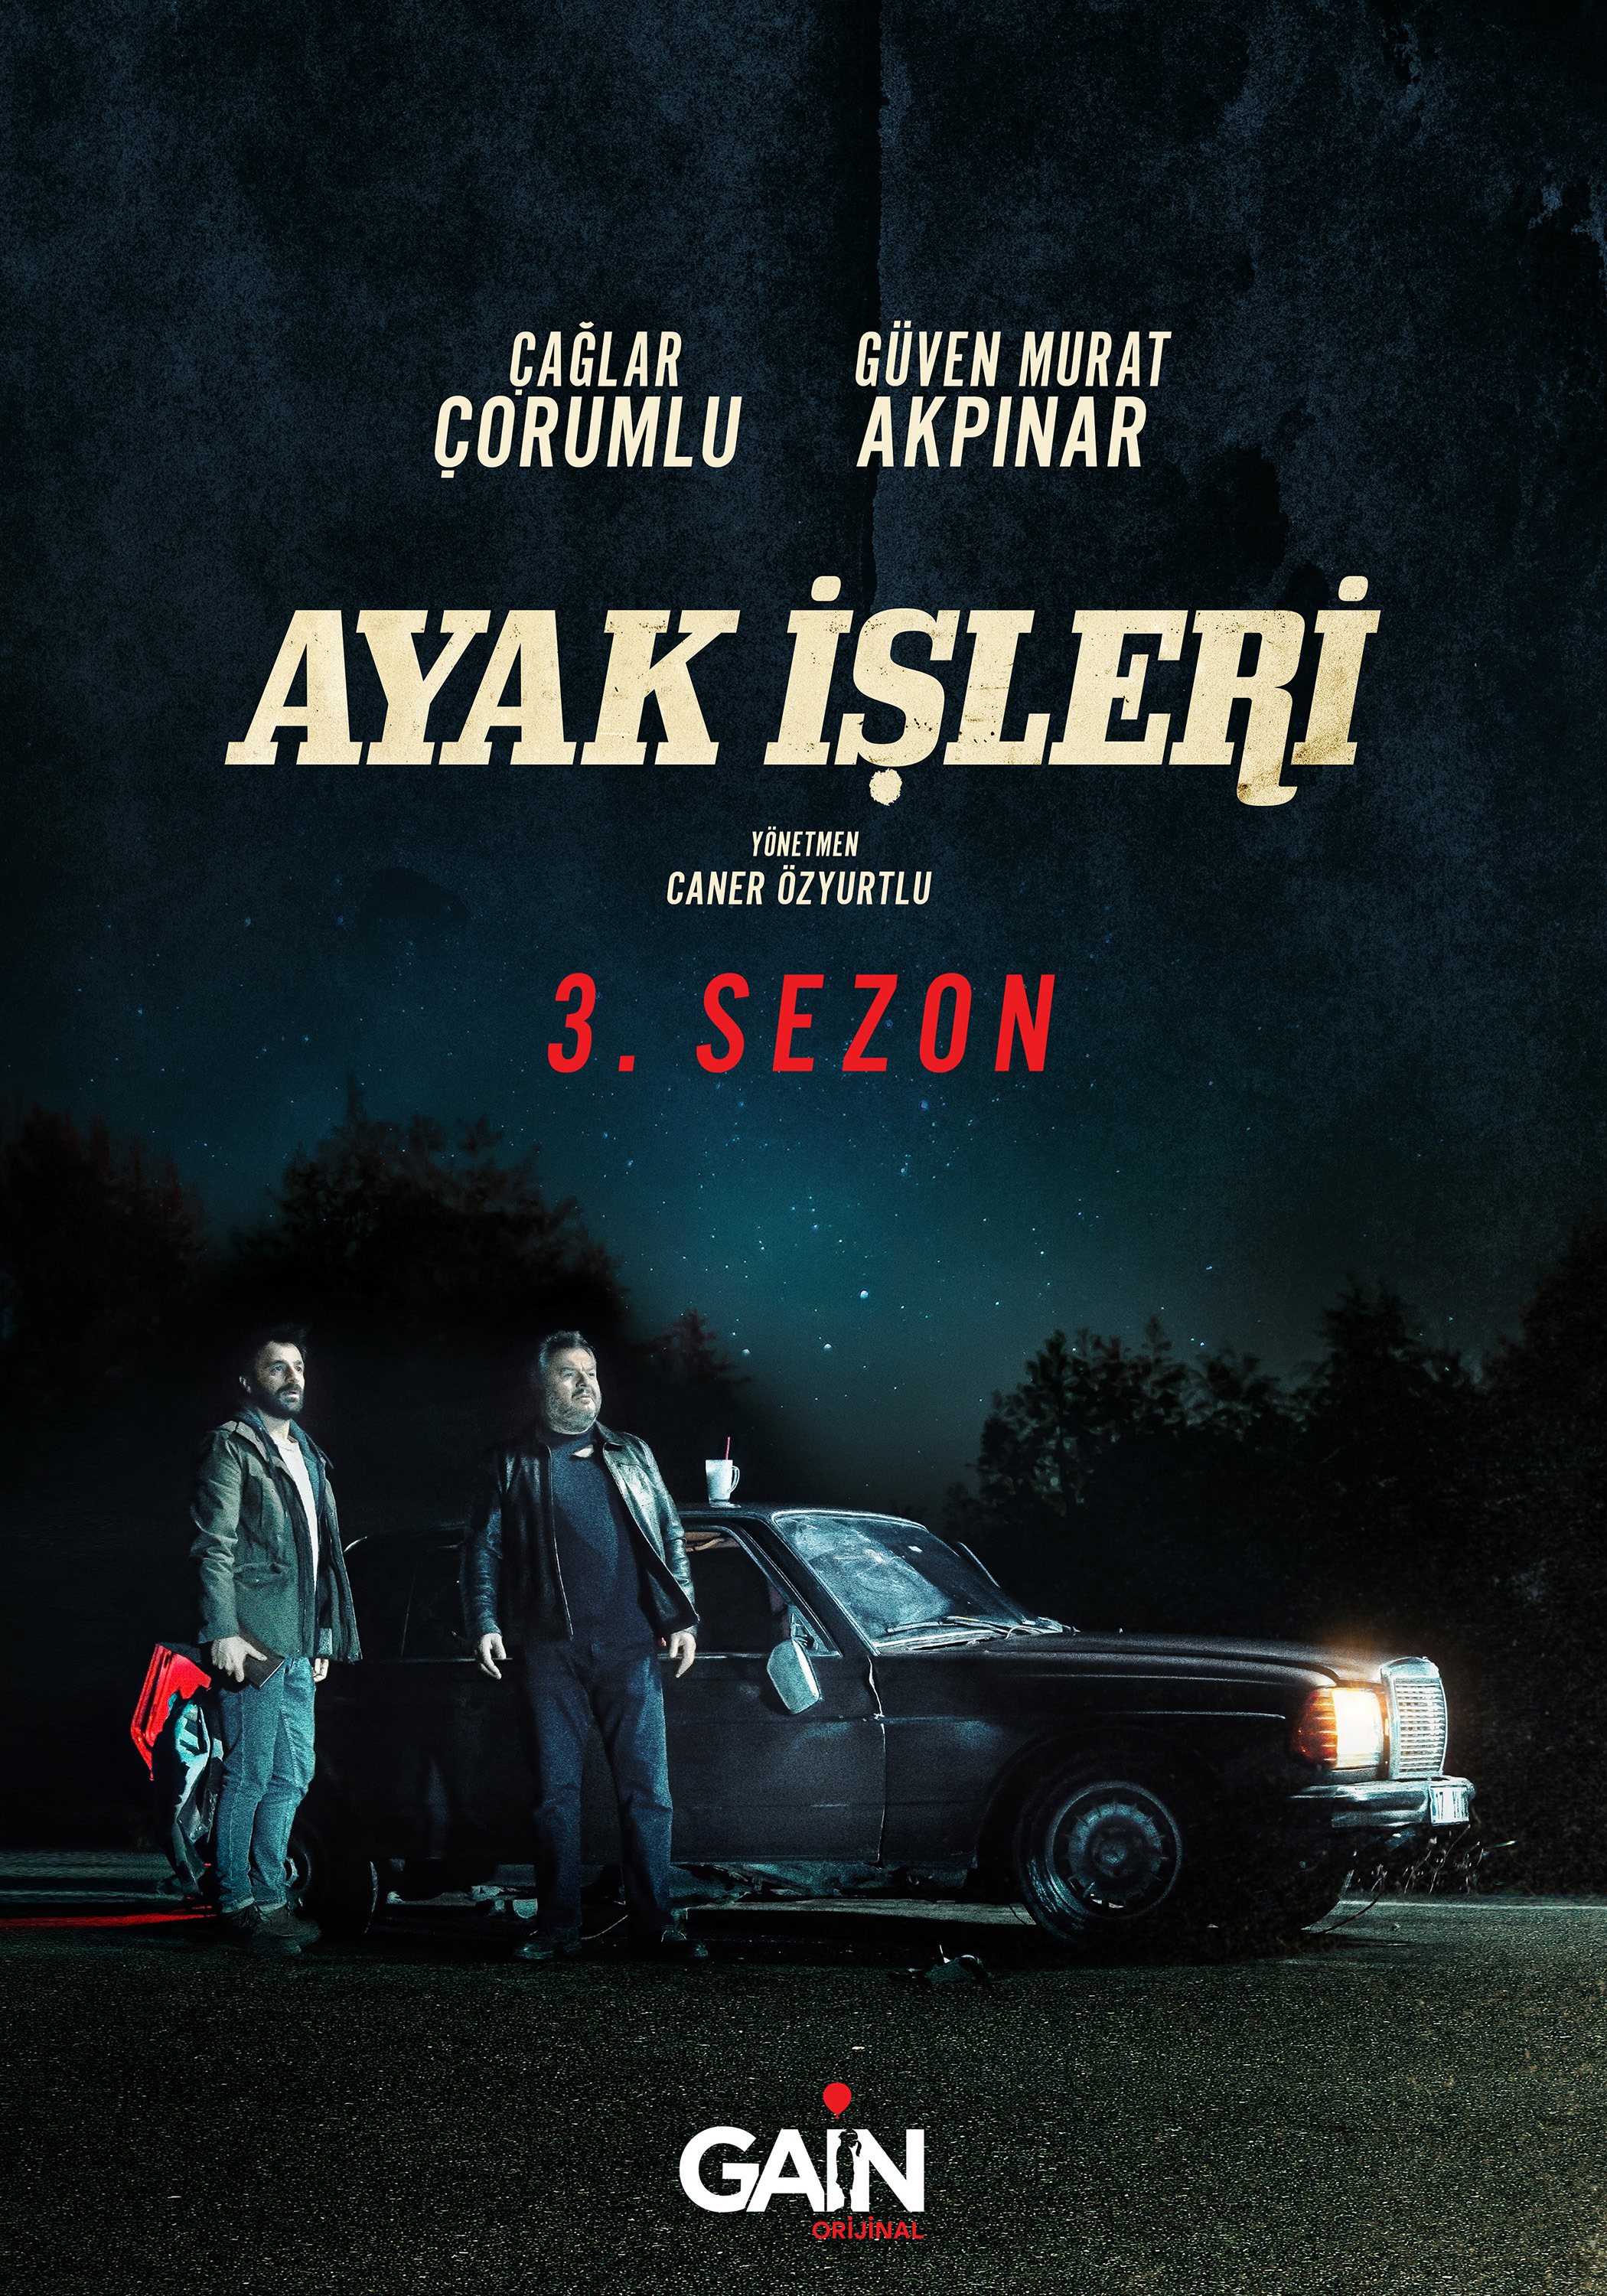 Mega Sized TV Poster Image for Ayak Isleri (#6 of 8)